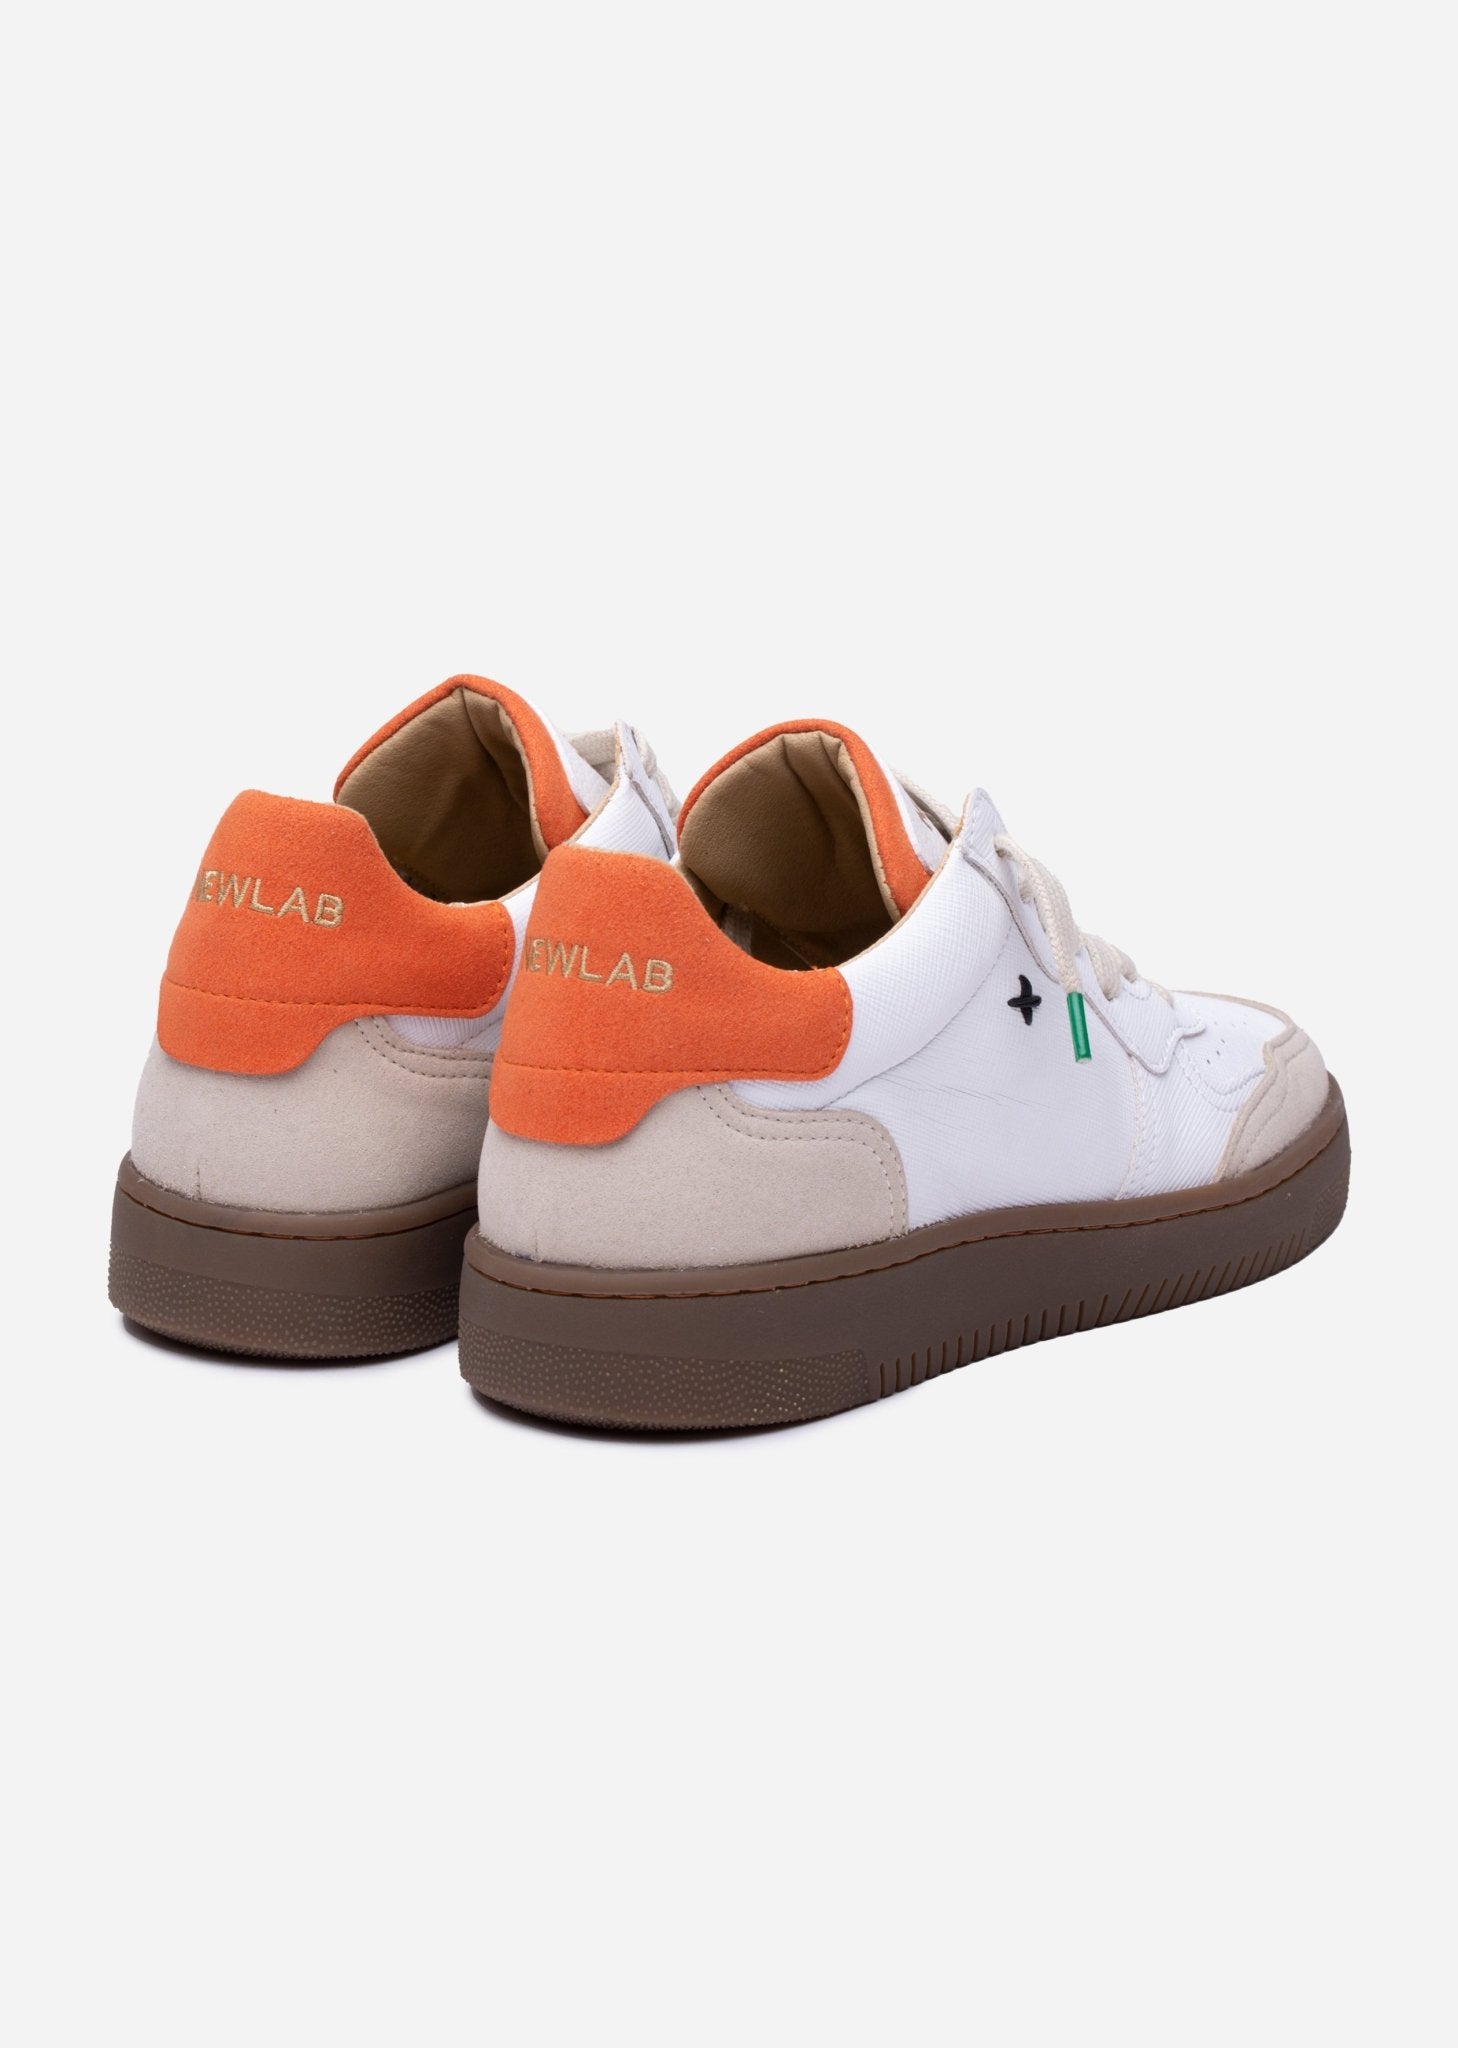 NL11 White/Orange/Camel - NEWLAB - Chaussures - NEWLAB